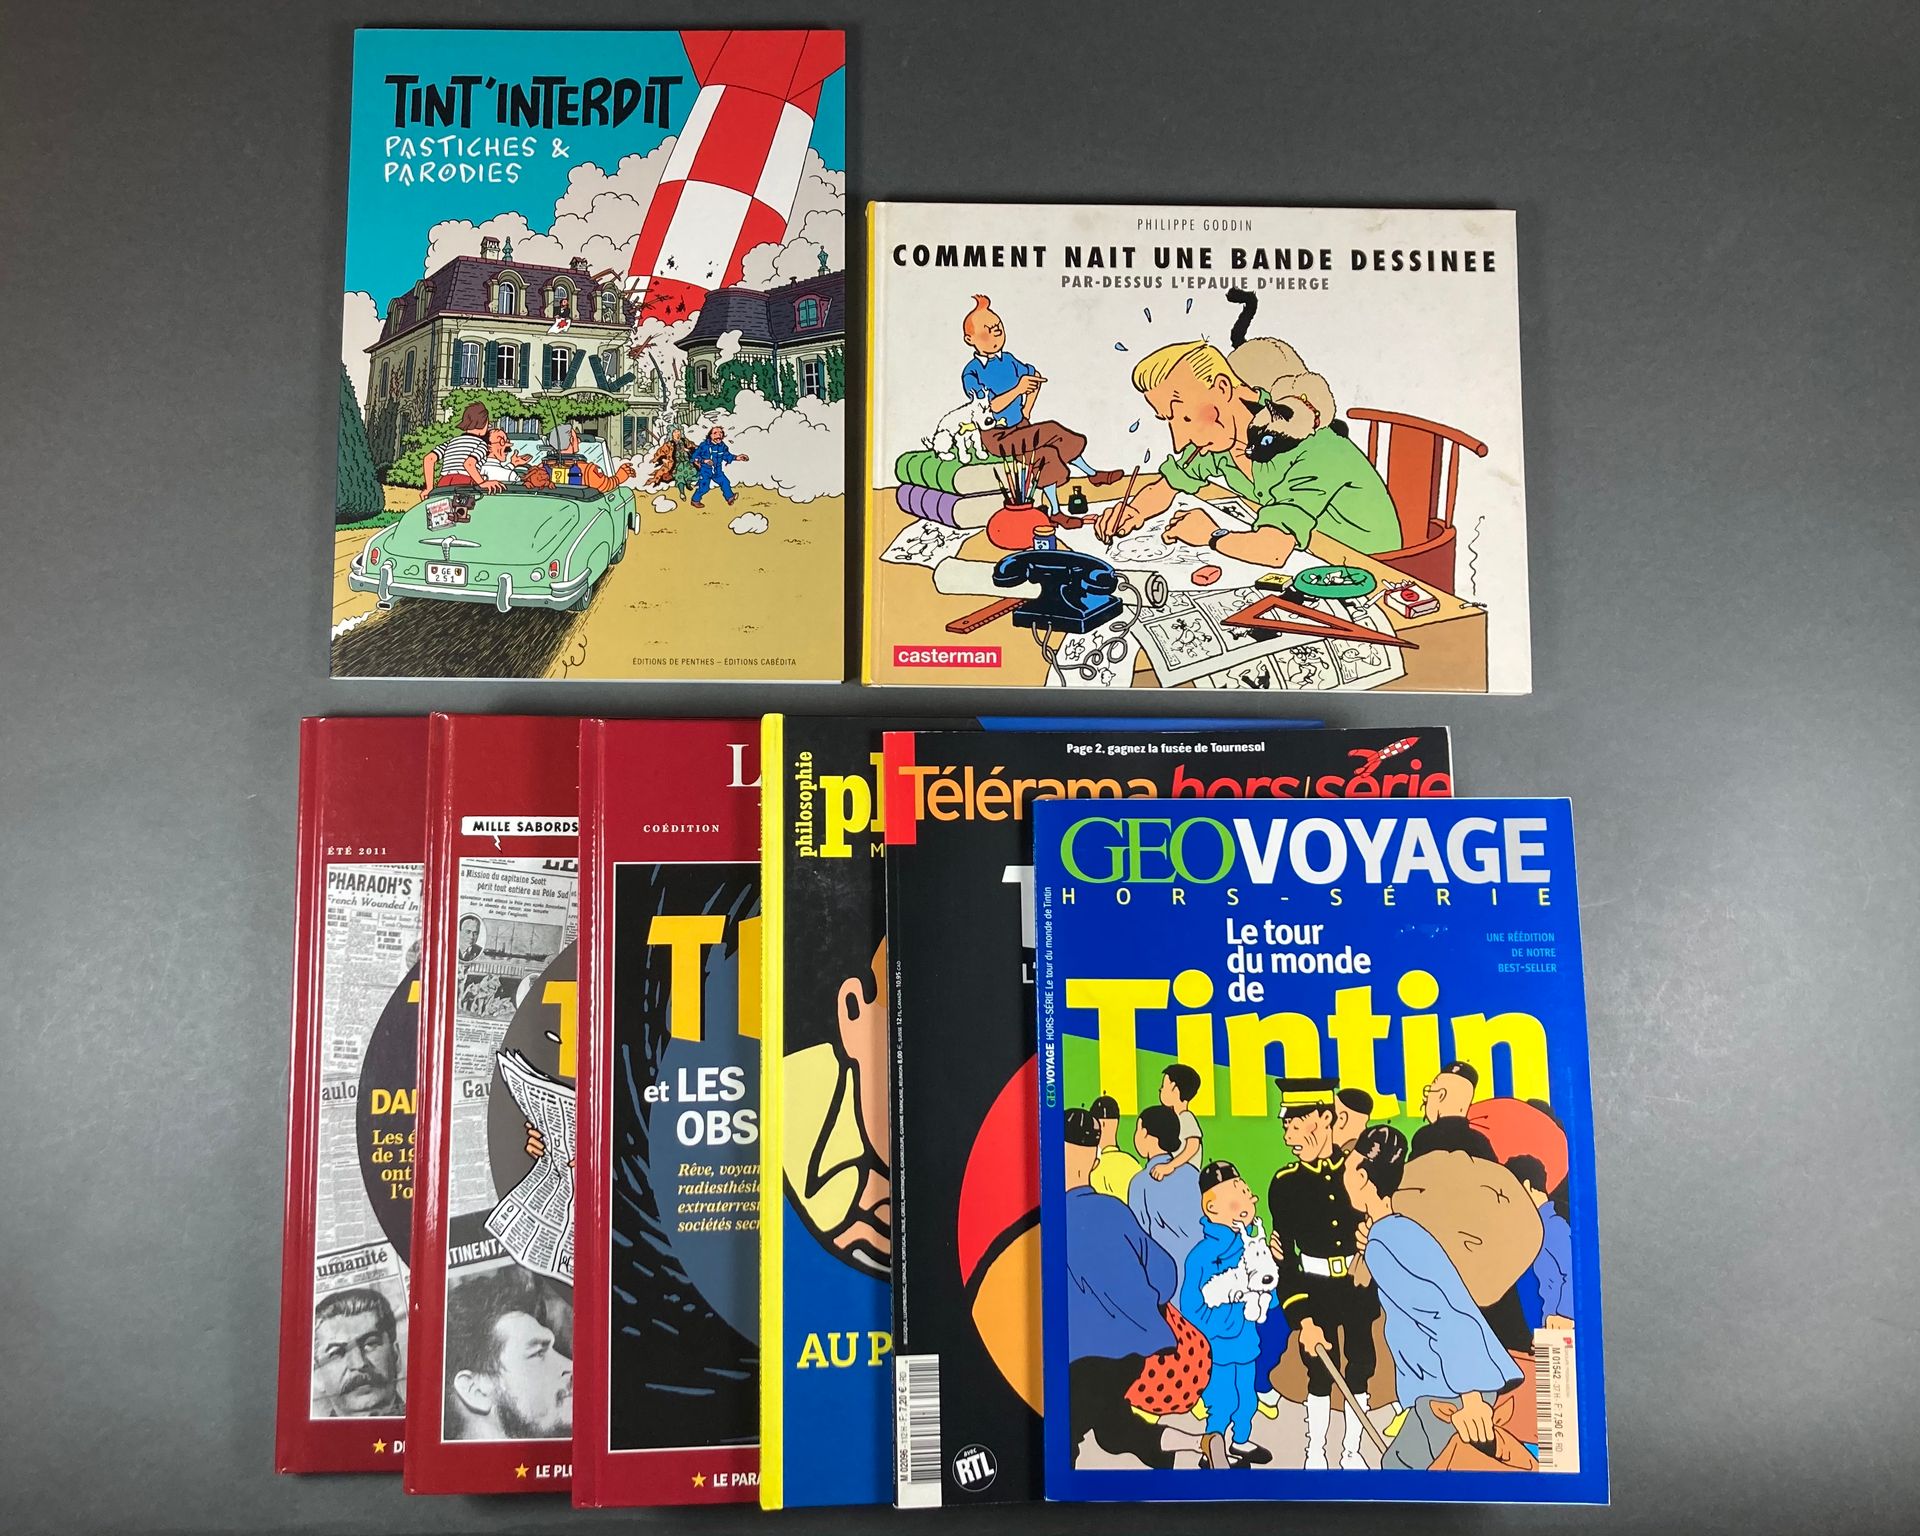 Hergé - Tintin From AJ Tornare, Tint'interdit, Pastiches et parodies, rare uncen&hellip;